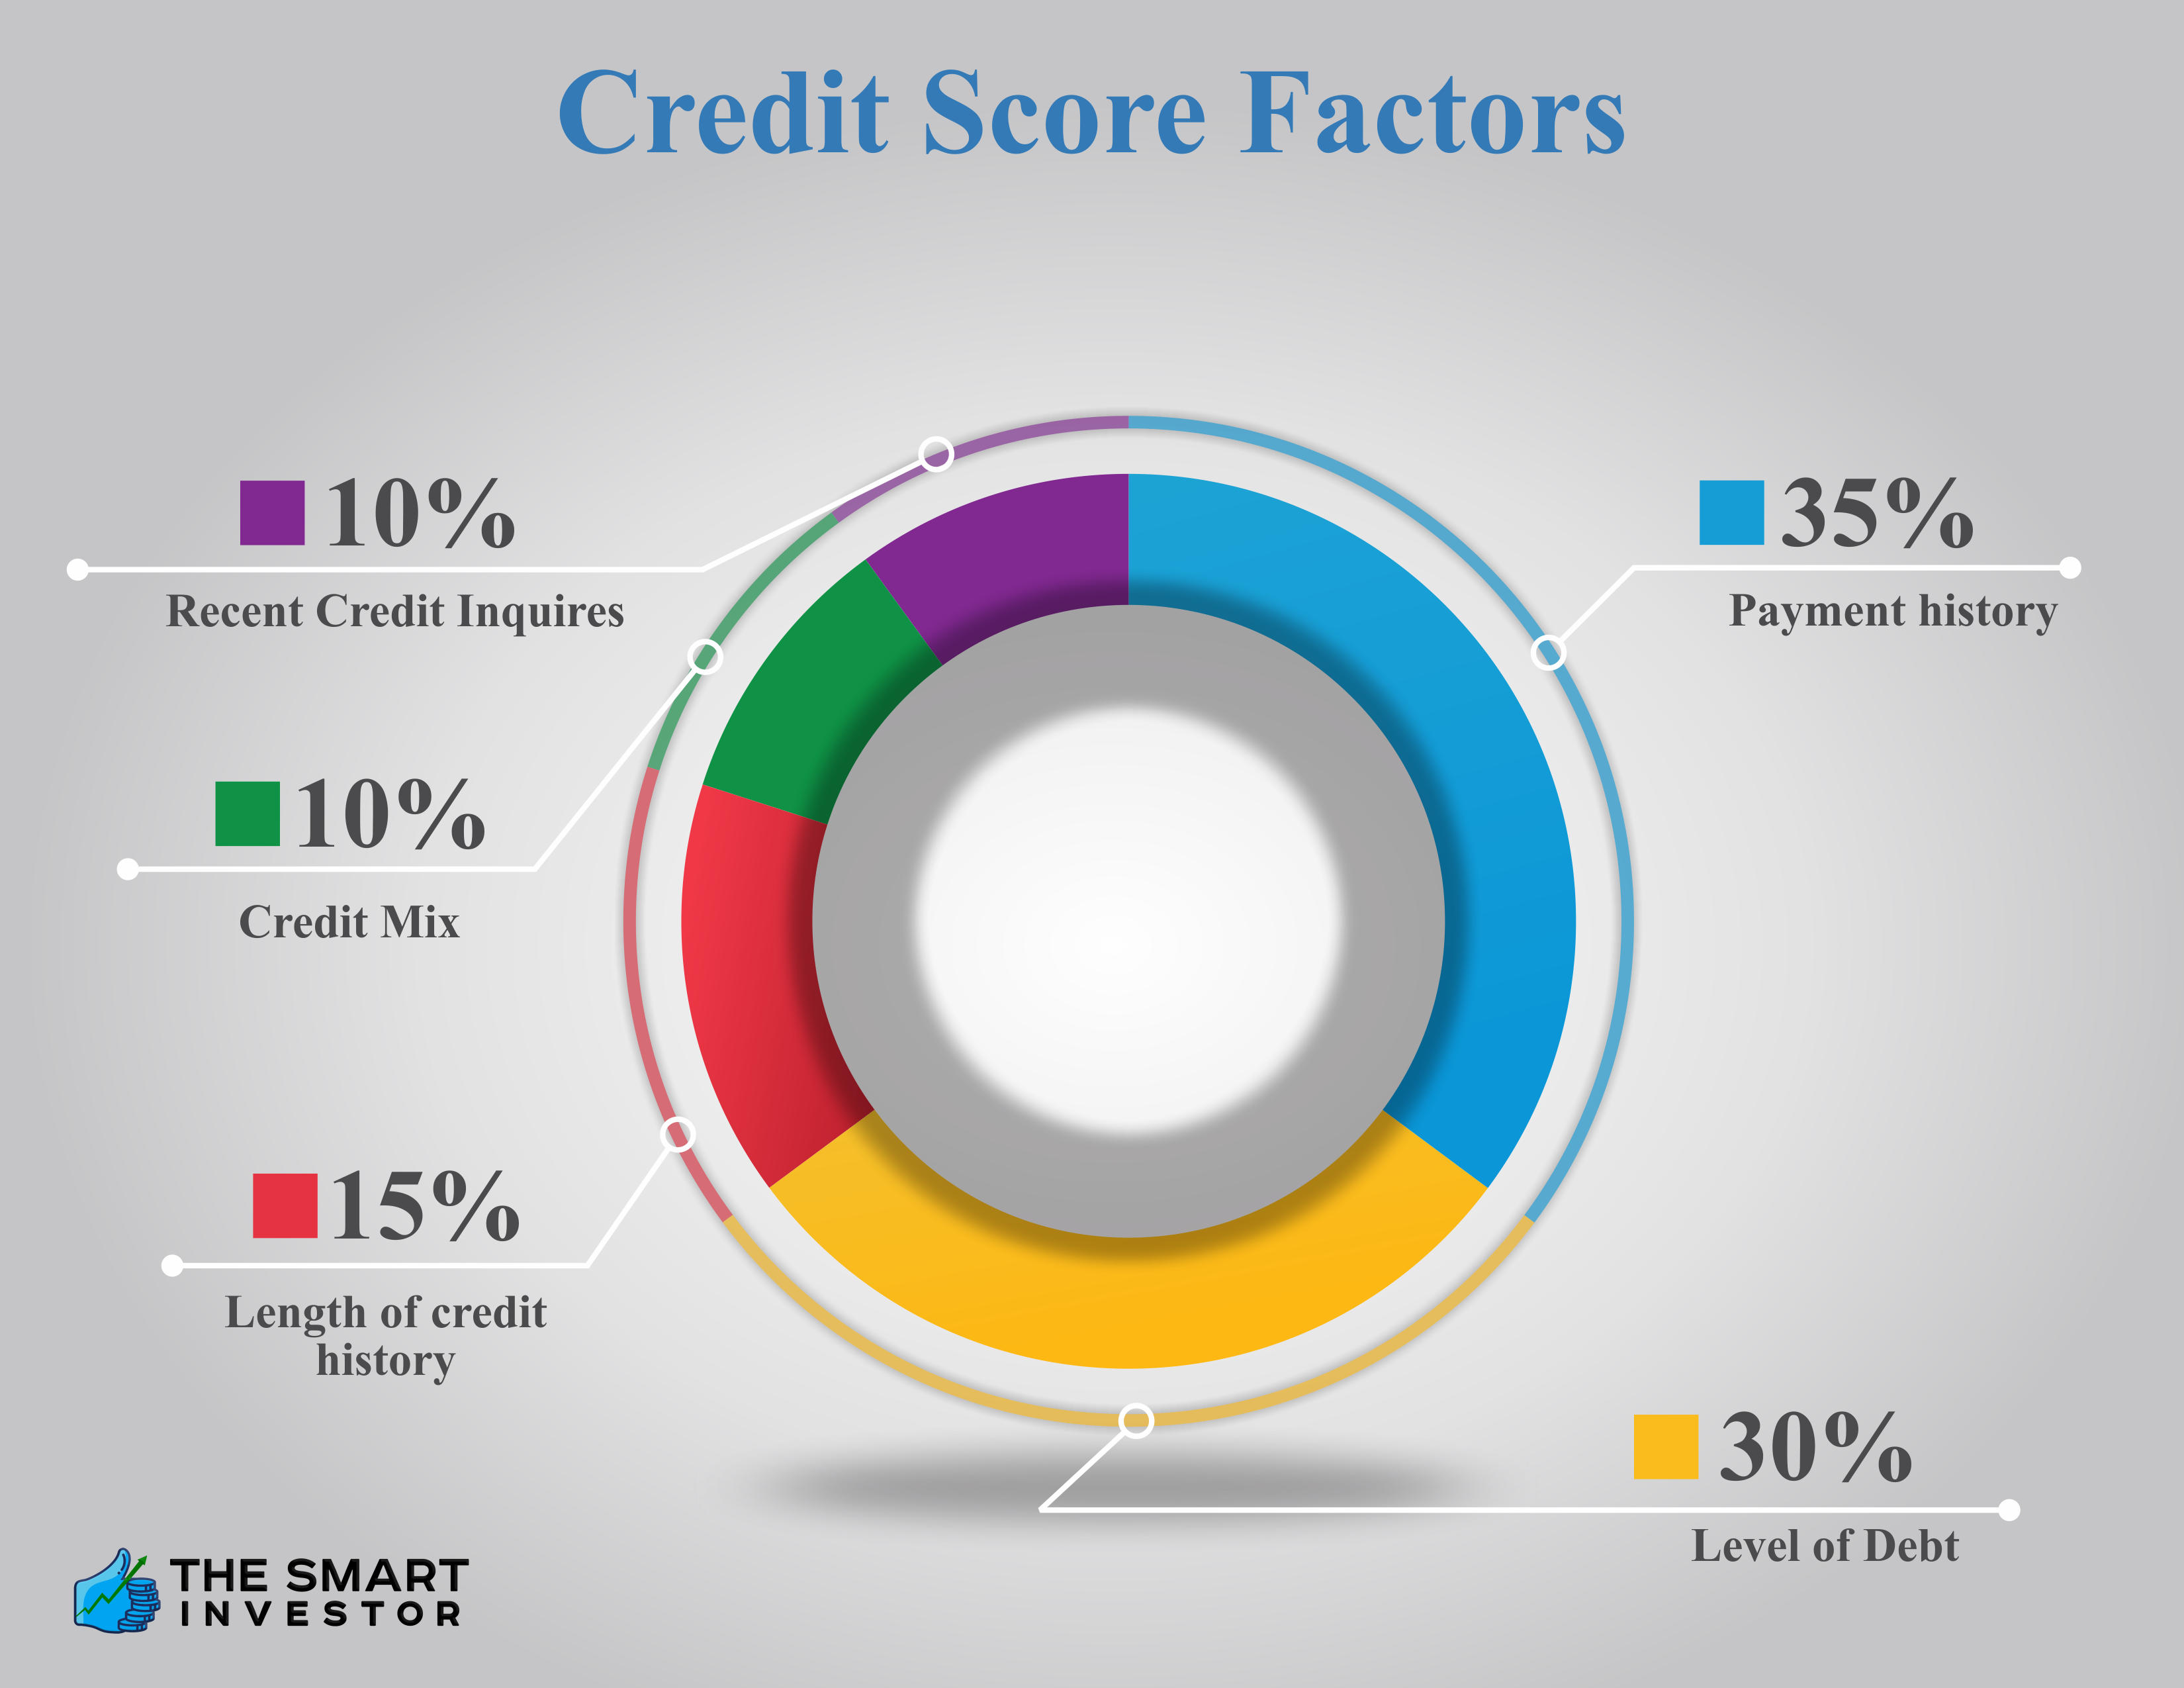 credit score factors